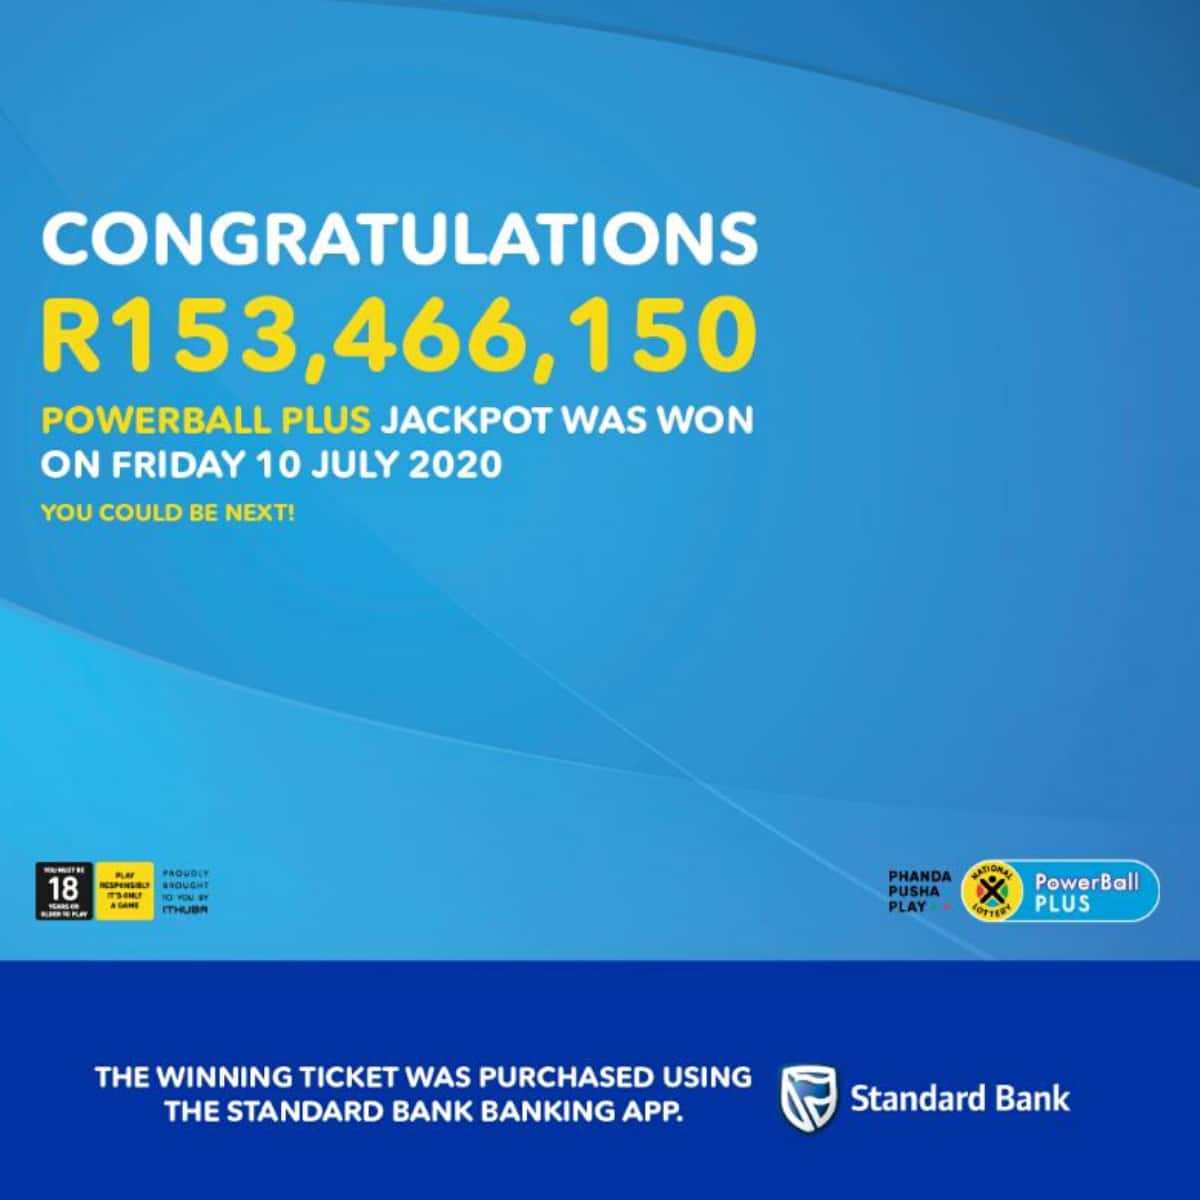 standard bank internet banking lotto